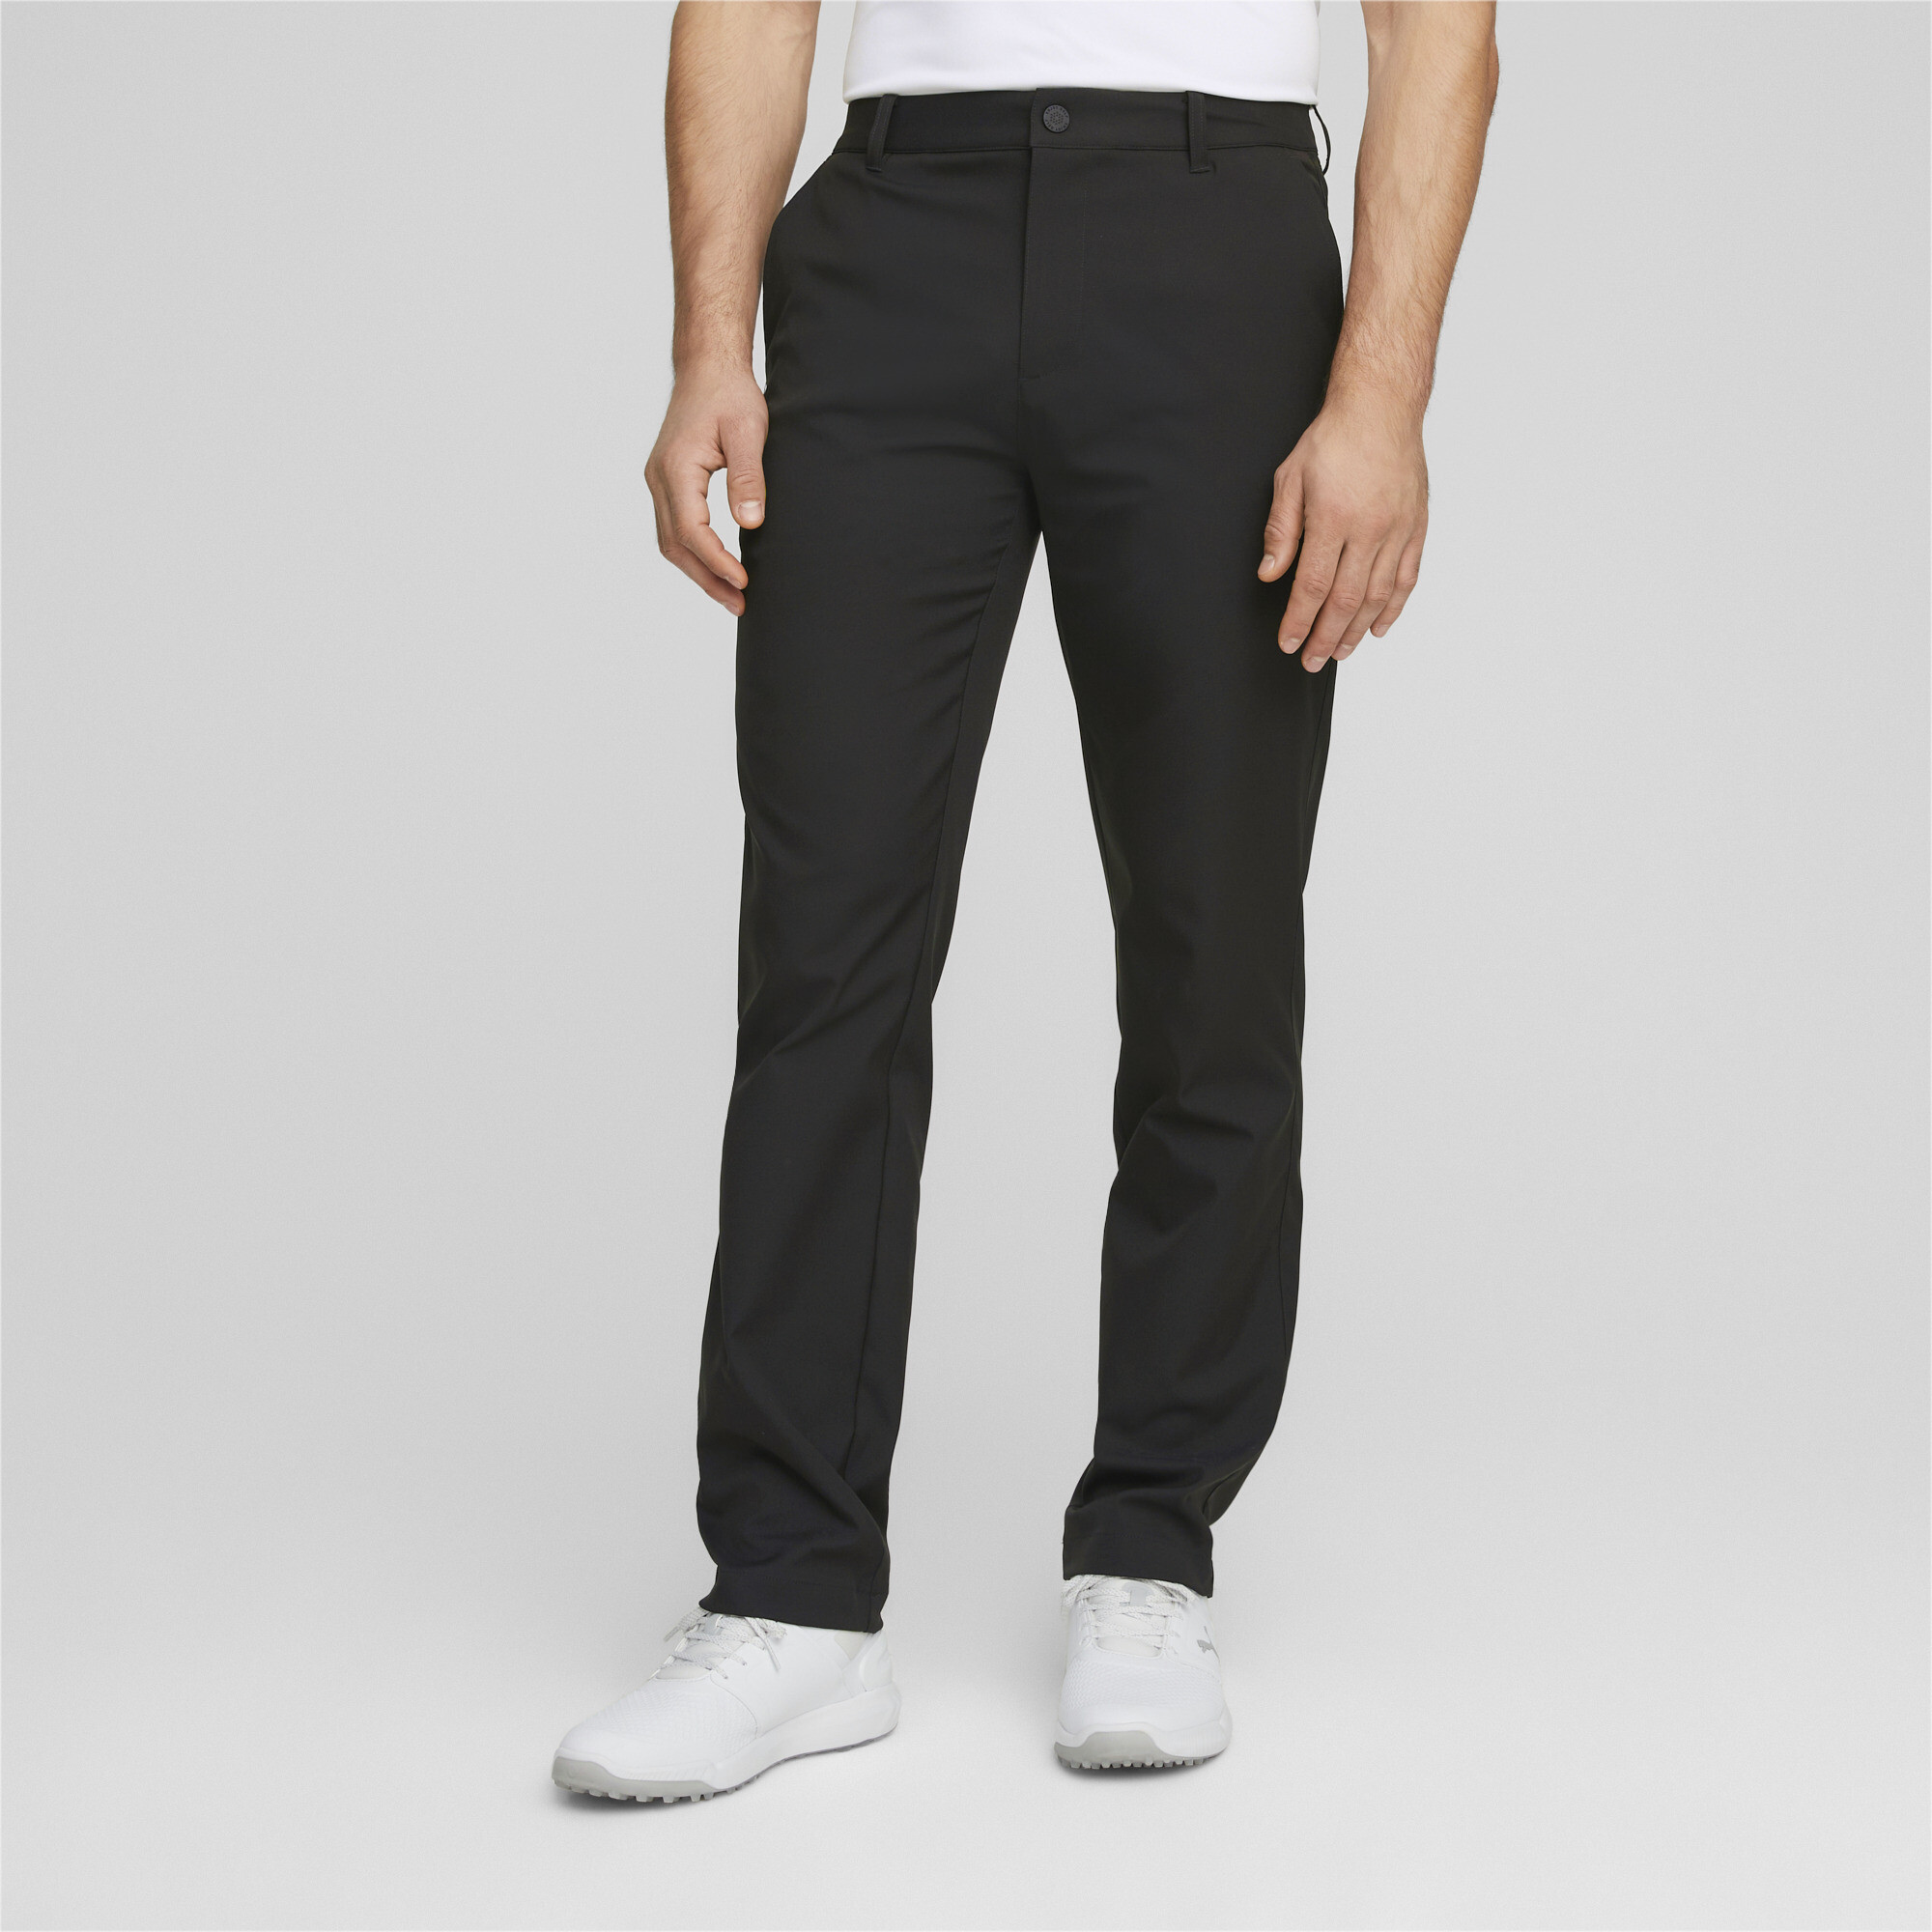 Men's Puma Dealer Golf Pants, Black, Size 32/36, Clothing